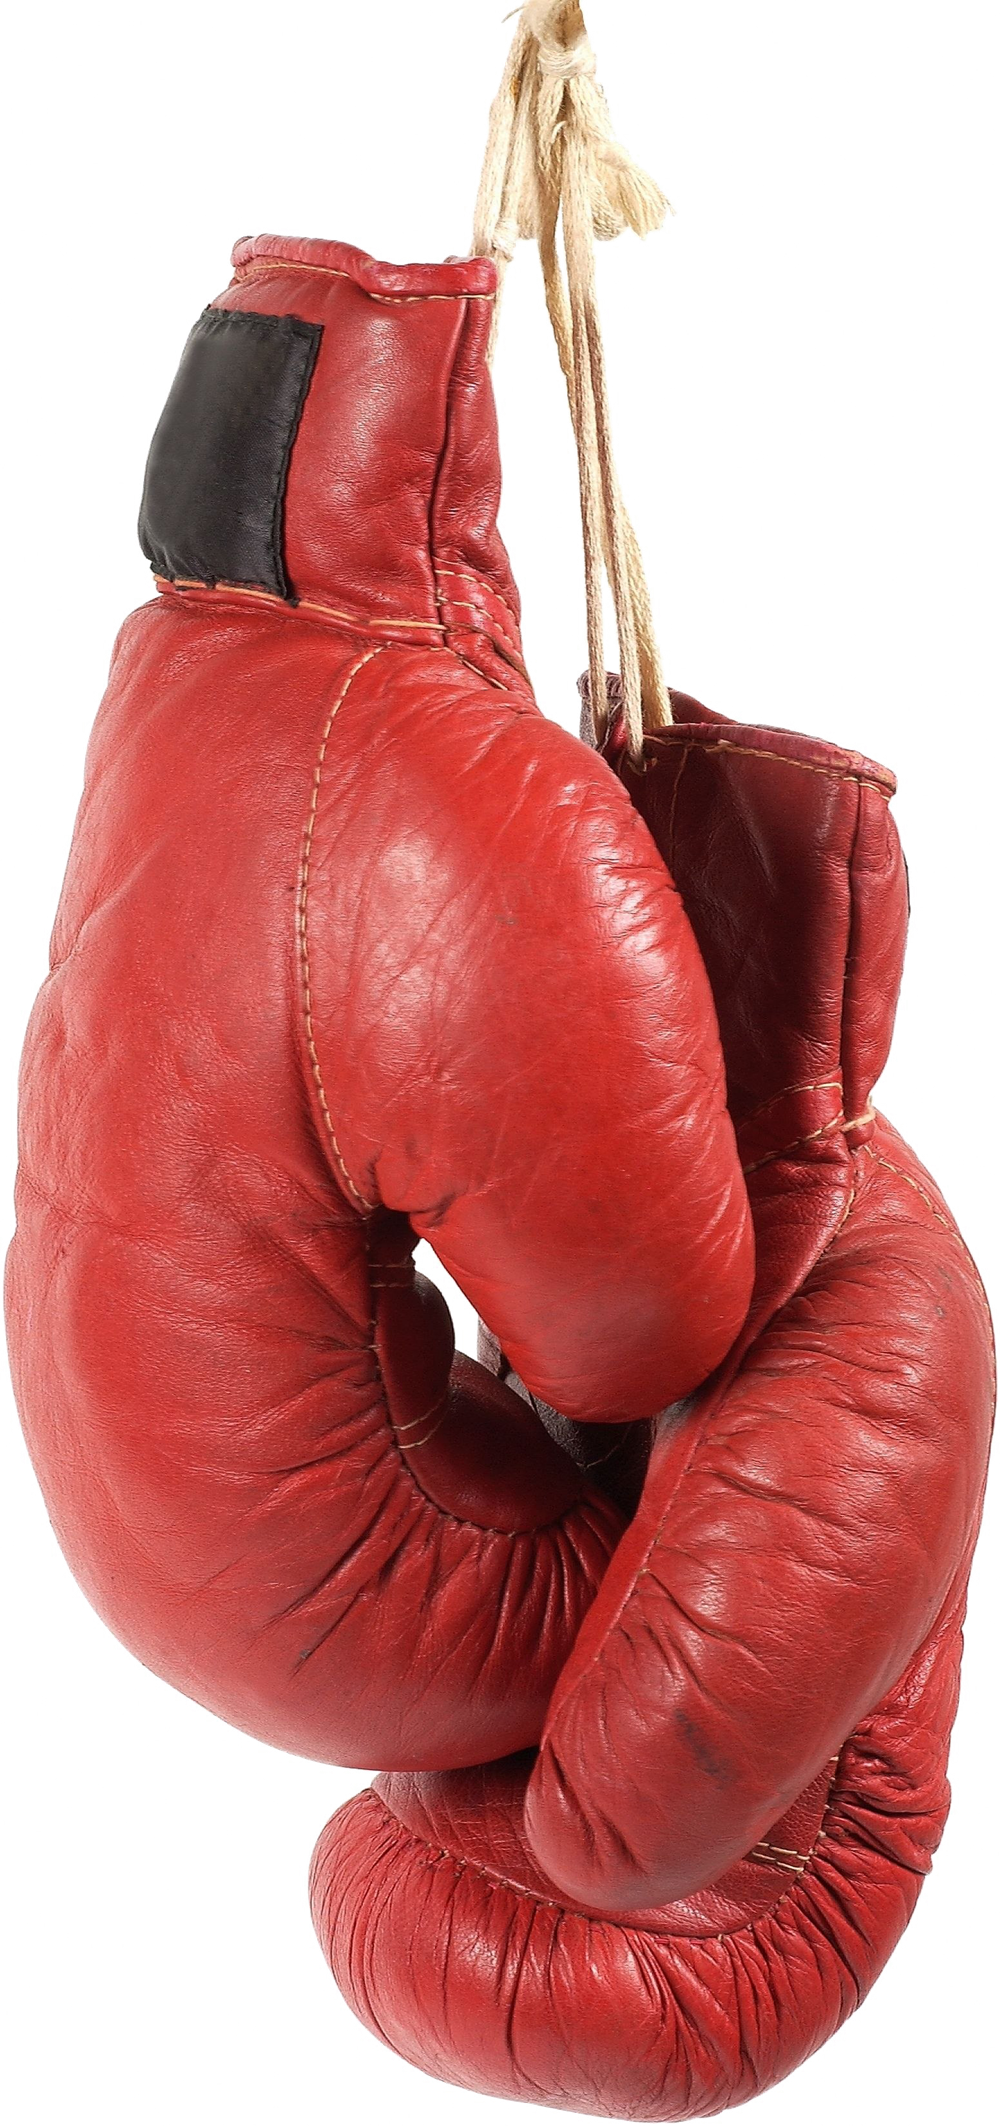 Boxing Gloves PNG Transparent Image